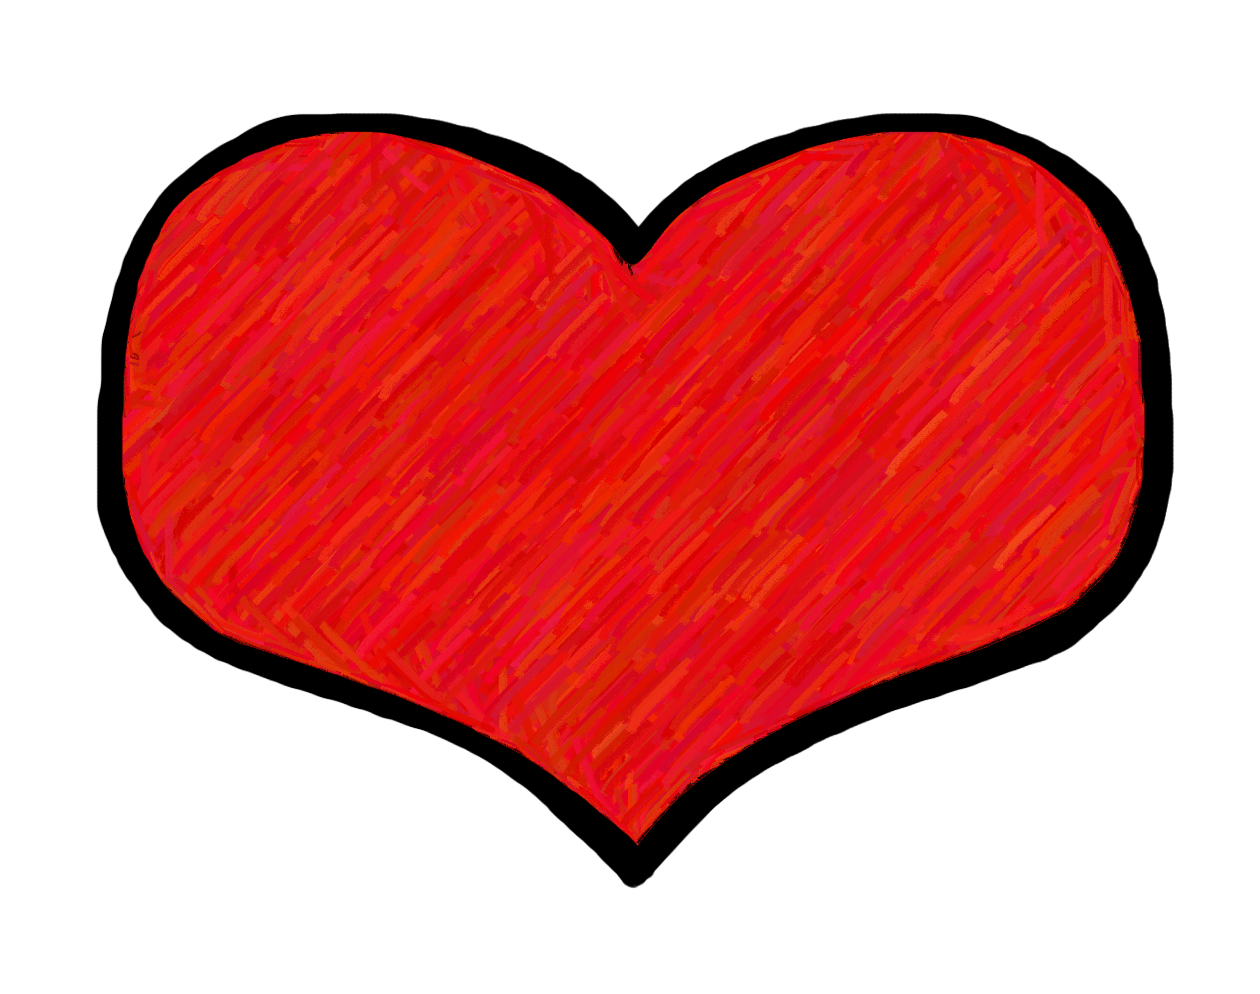 Love Hearts Clip Art u0026mid